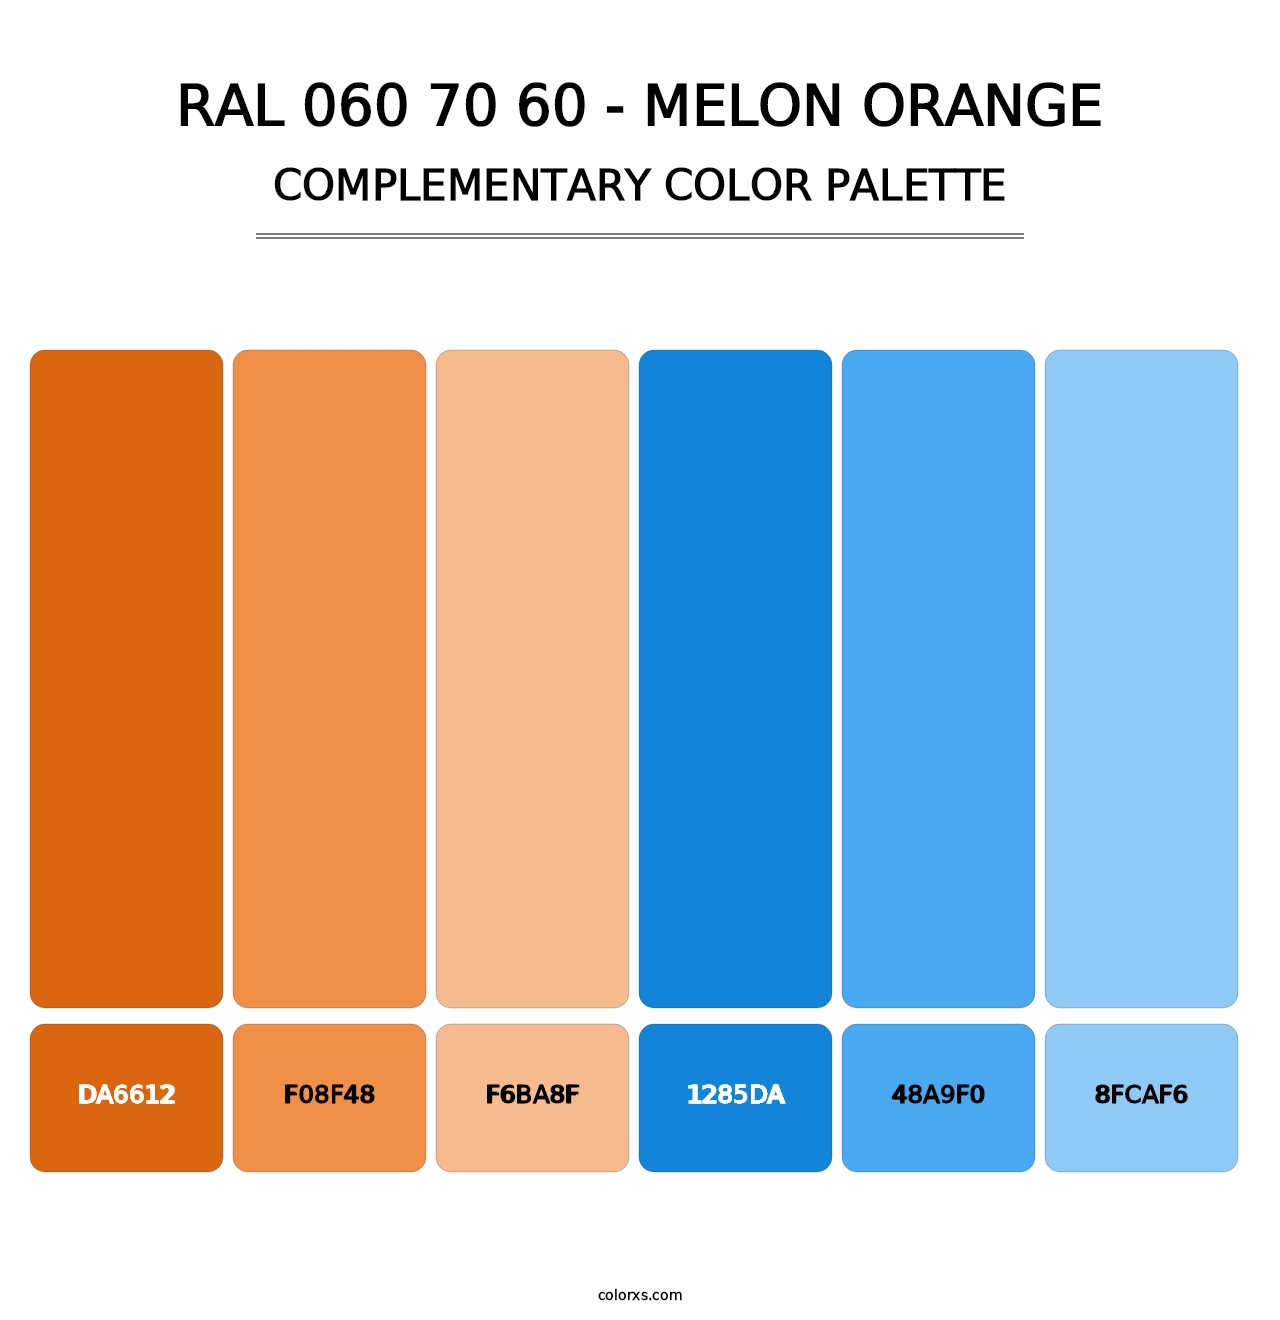 RAL 060 70 60 - Melon Orange - Complementary Color Palette